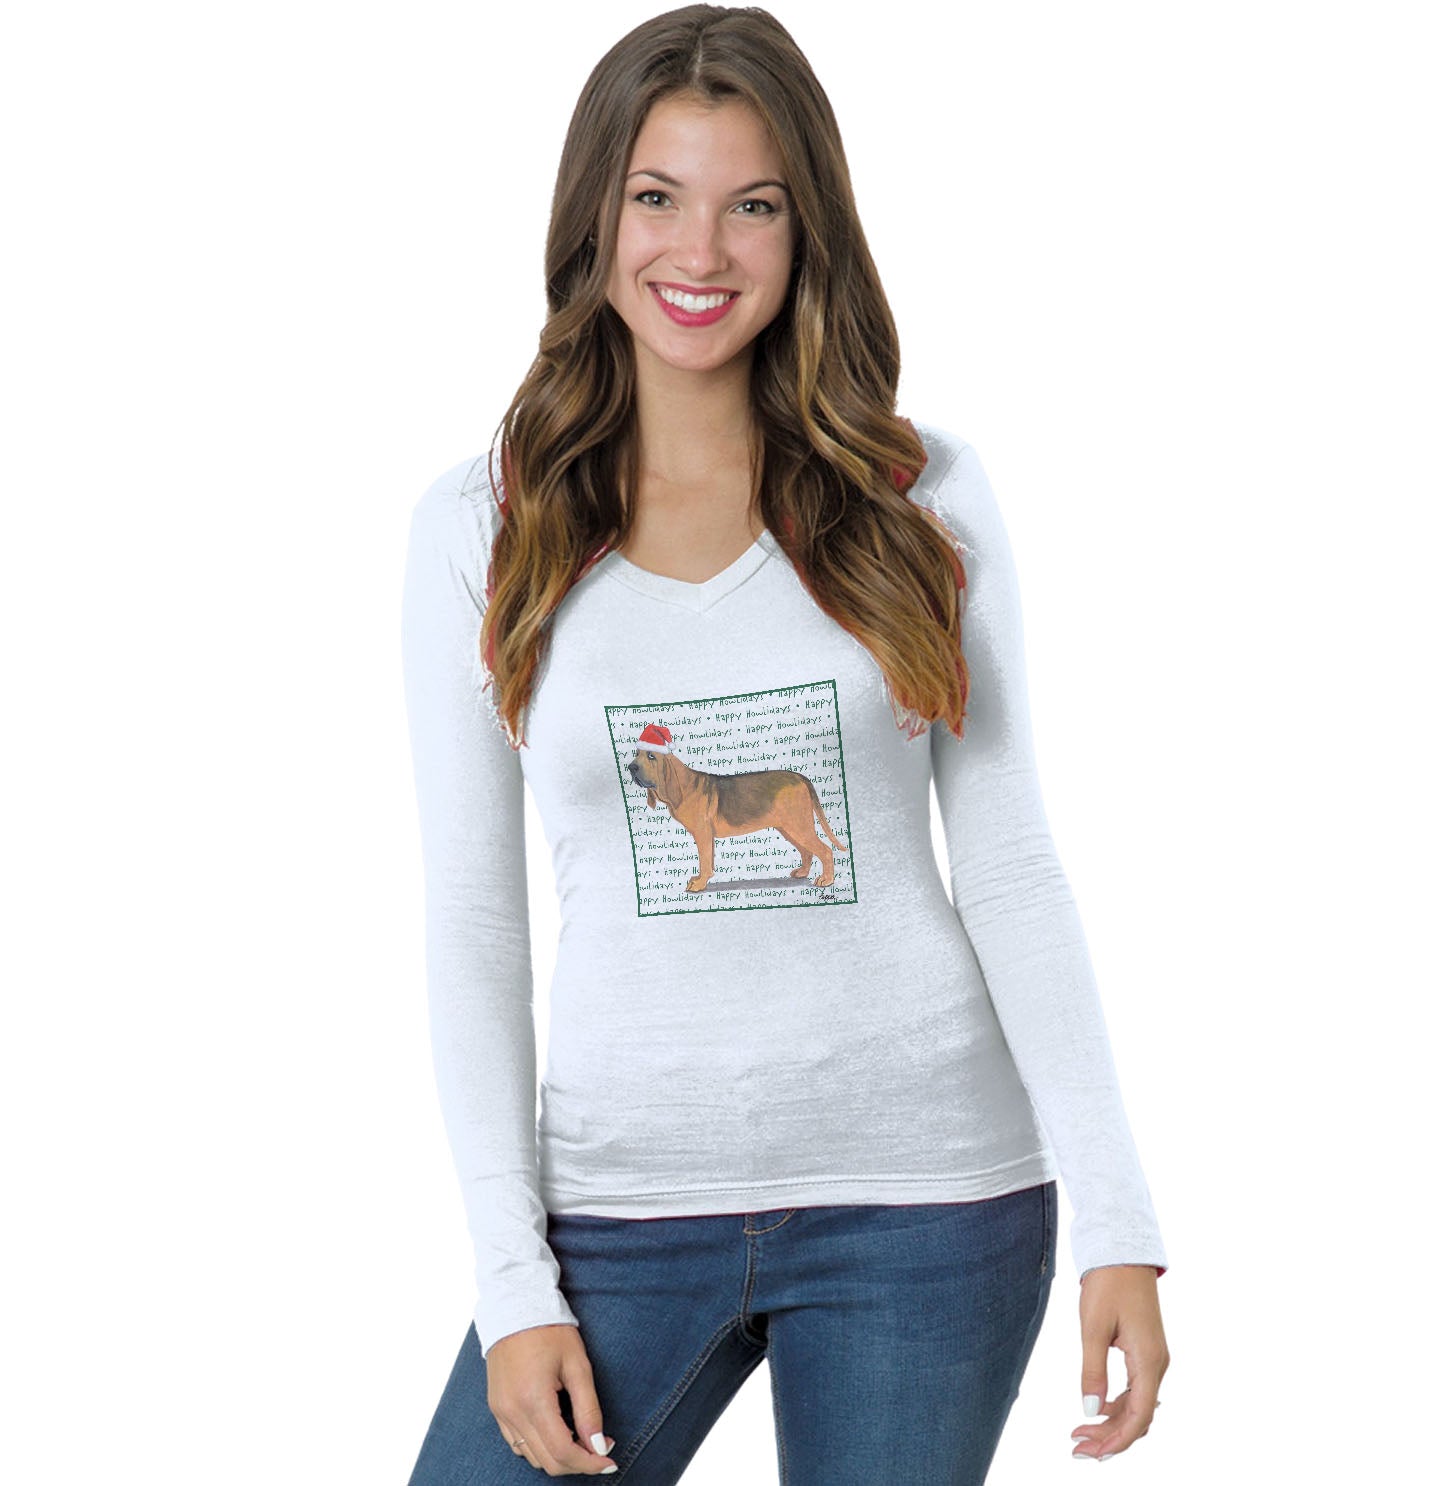 Bloodhound Happy Howlidays Text - Women's V-Neck Long Sleeve T-Shirt